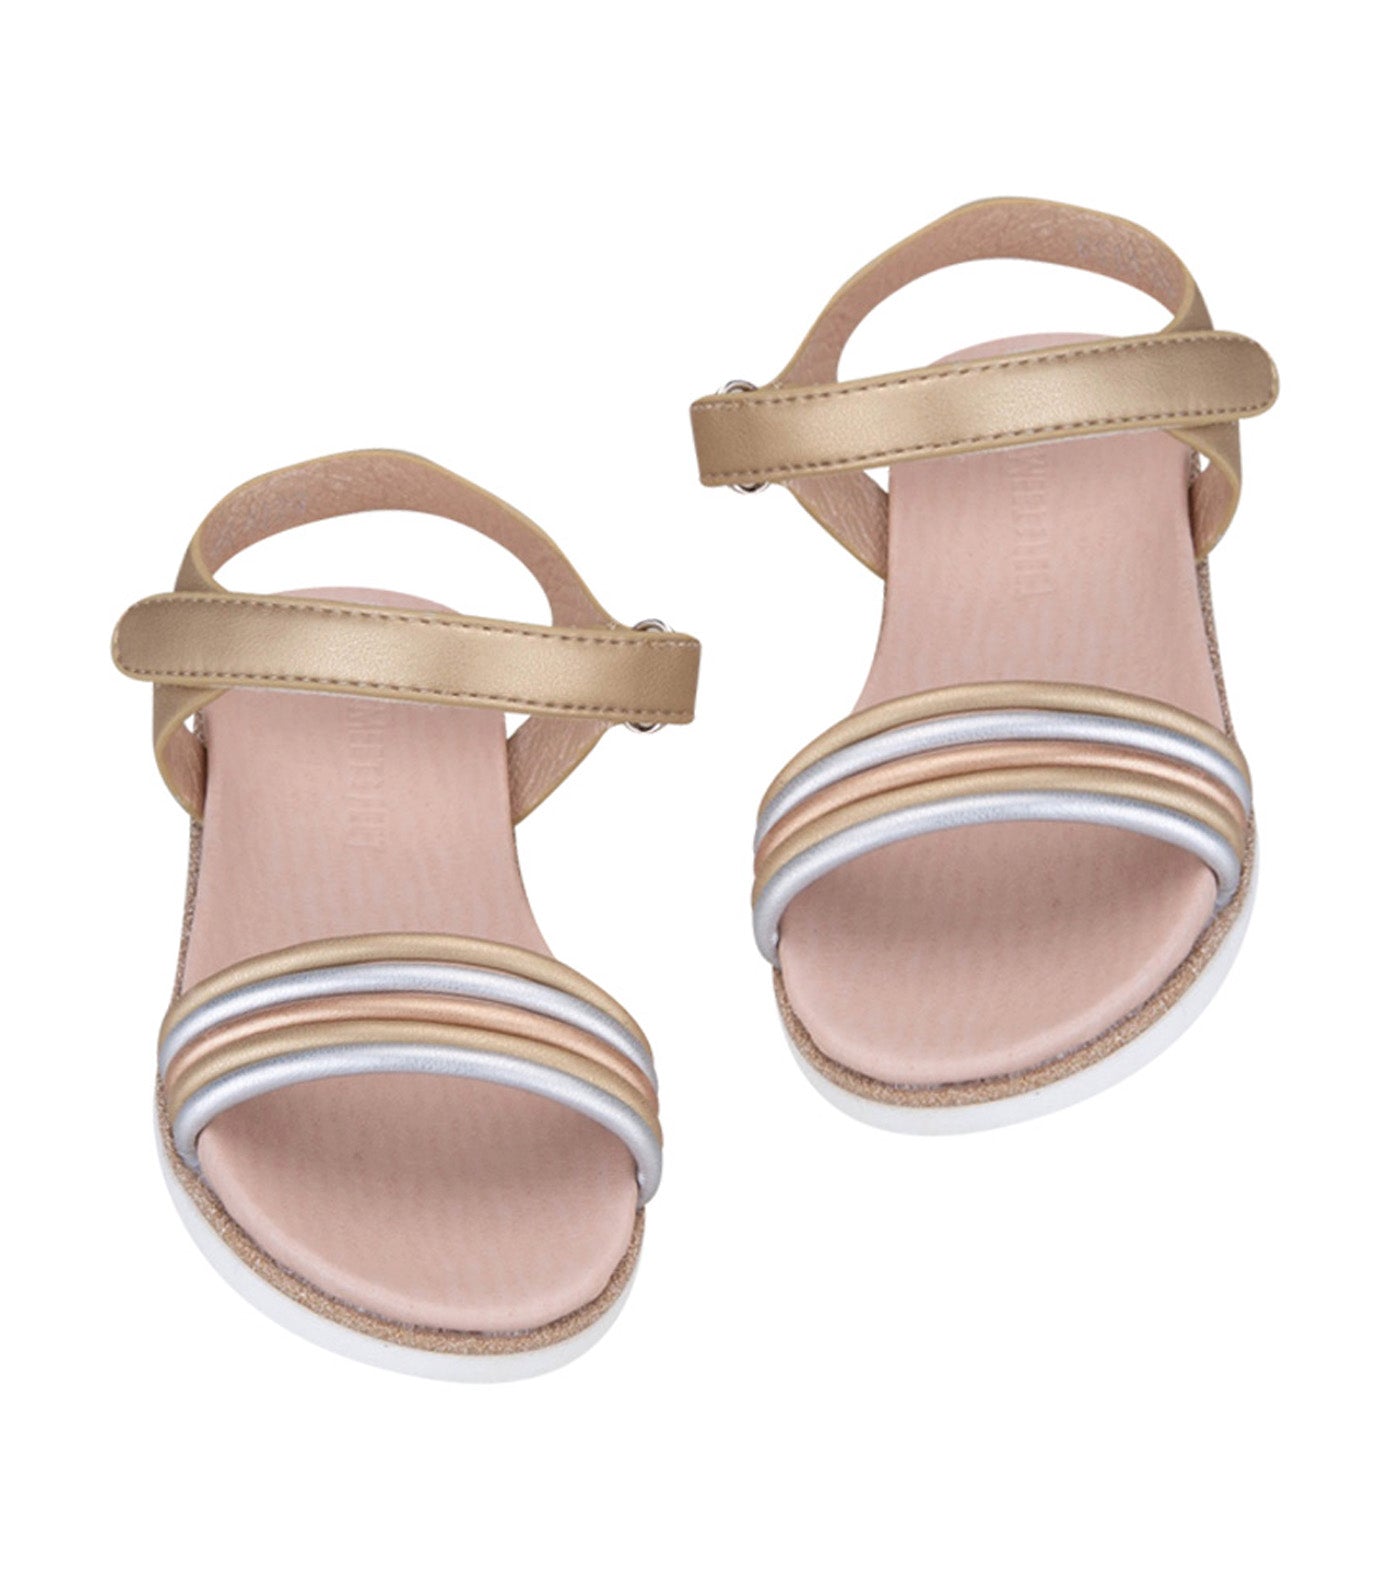 Suri Kids Sandals for Girls - Gold